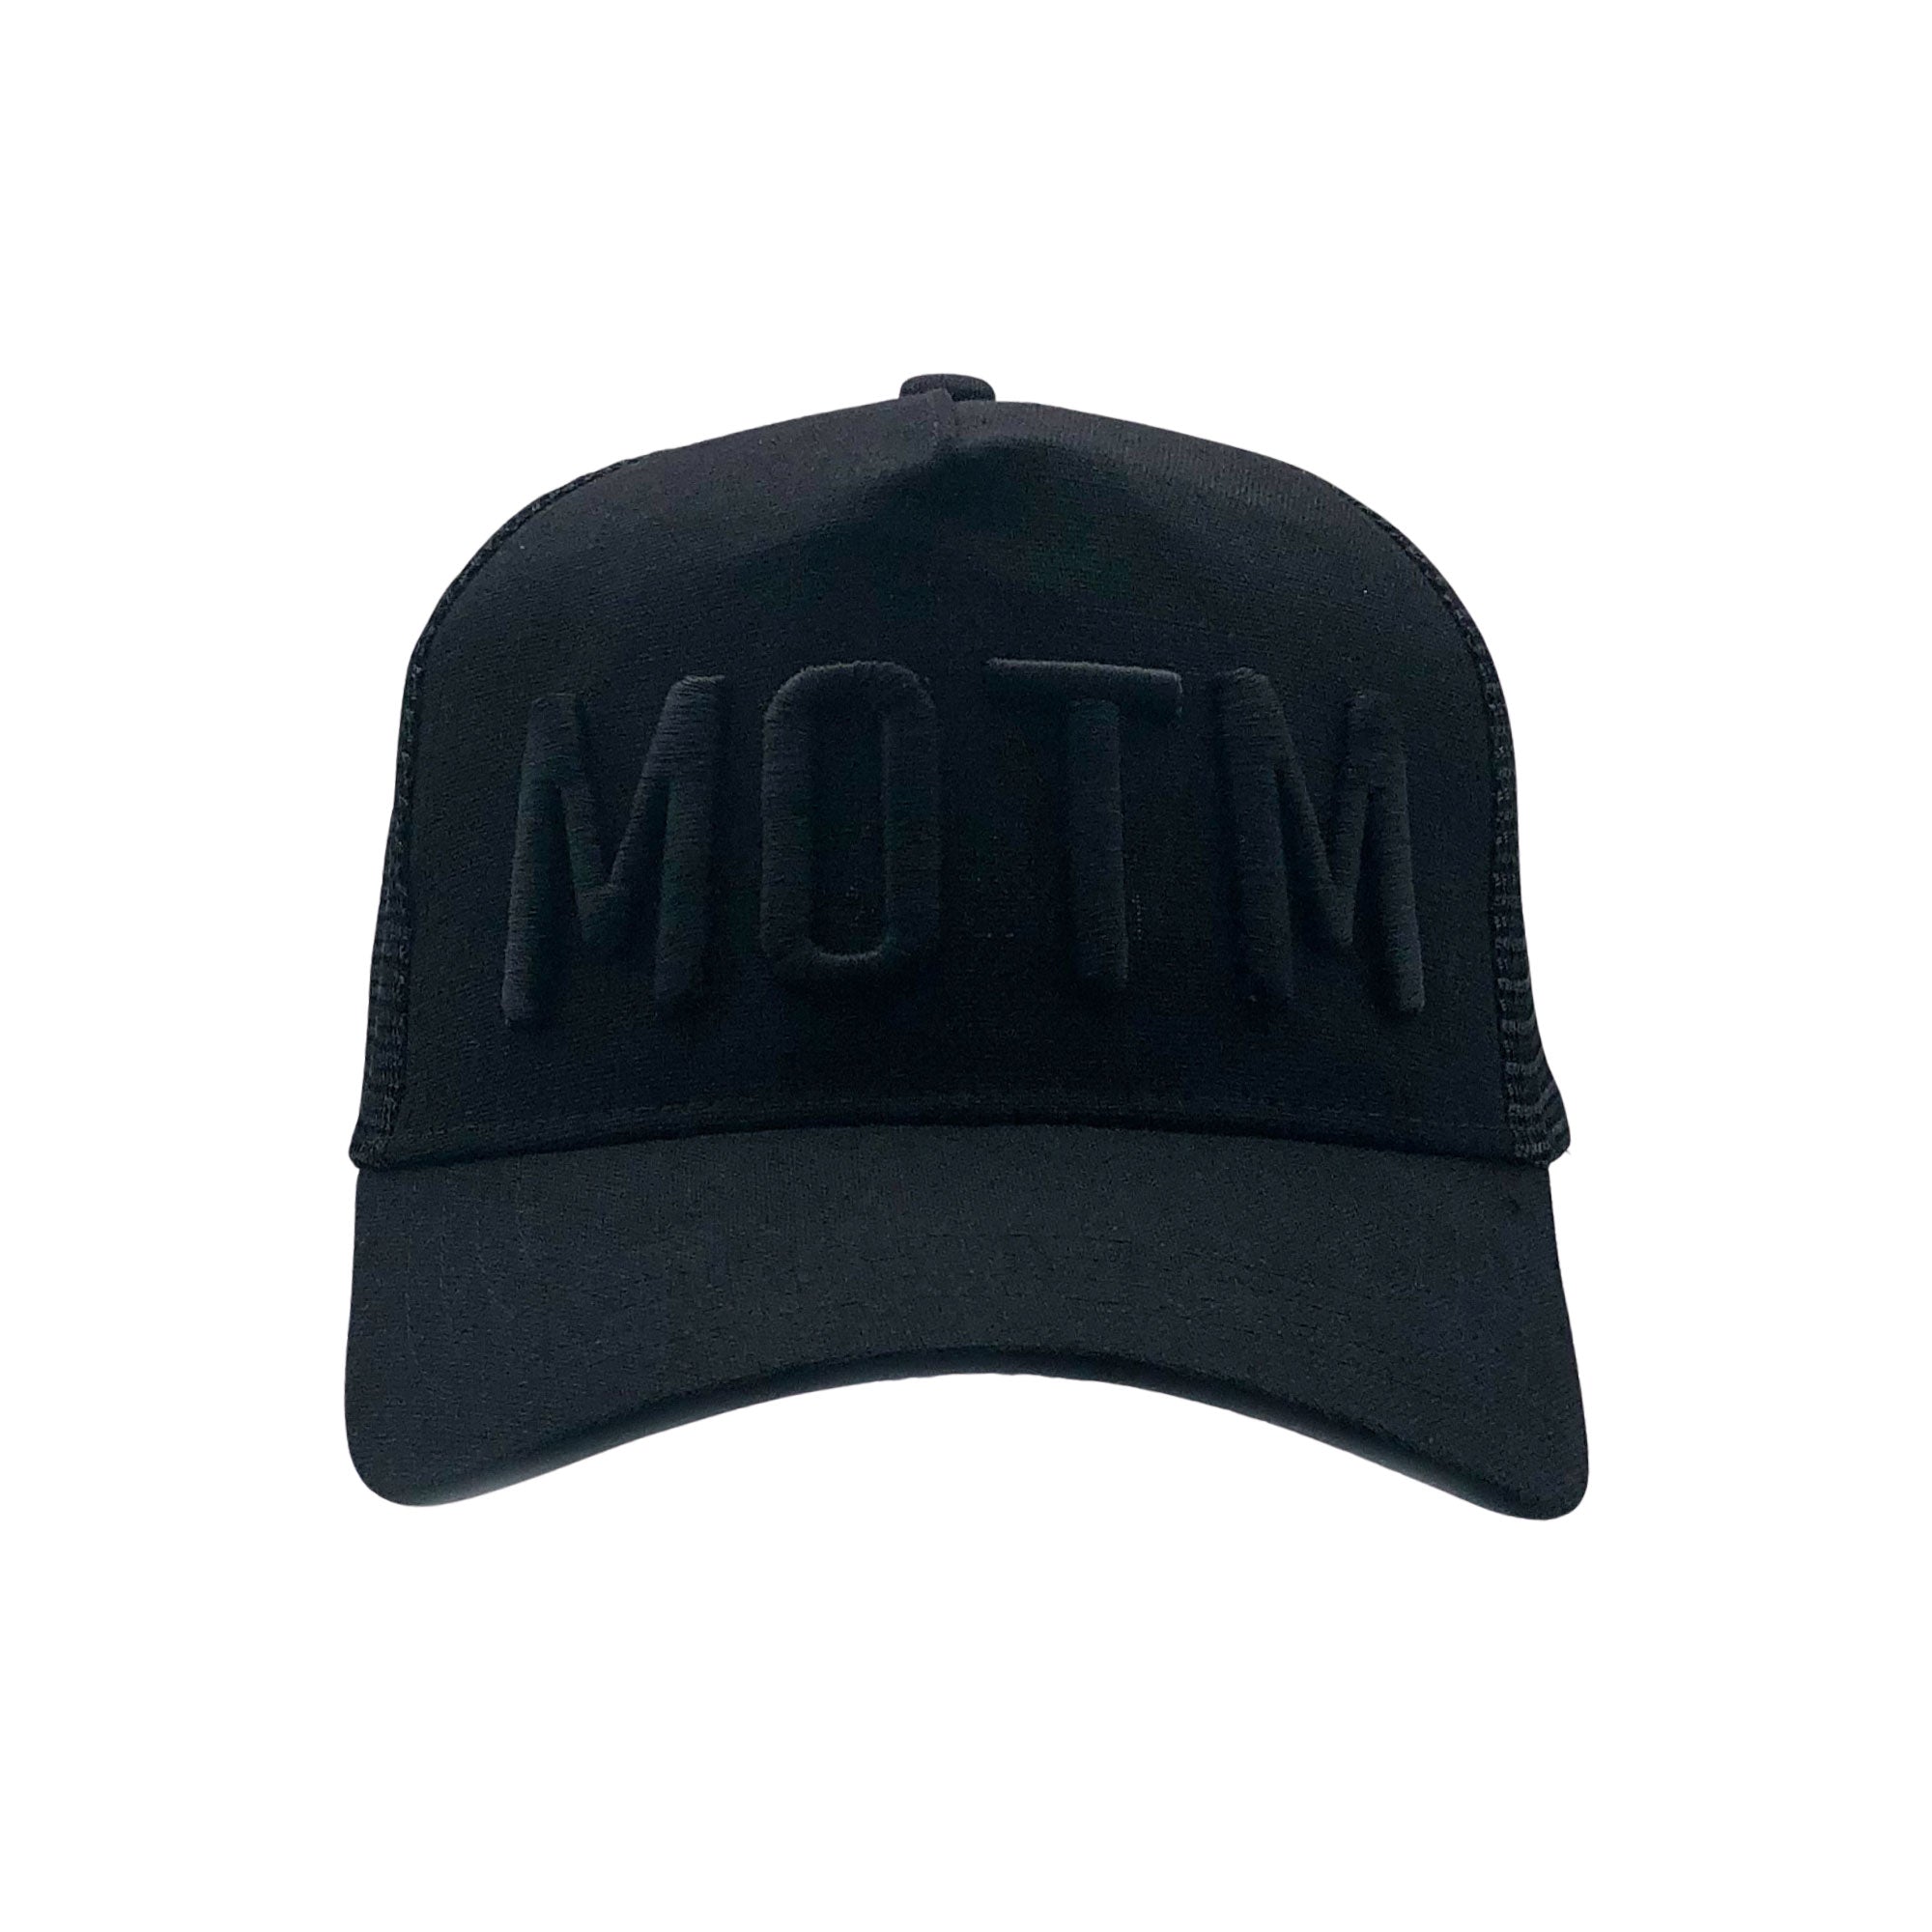 MAN OF THE MATCH® Roberto Carlos Official Cap - MOTM 3D Embroidered Black on Black - Premium Linen